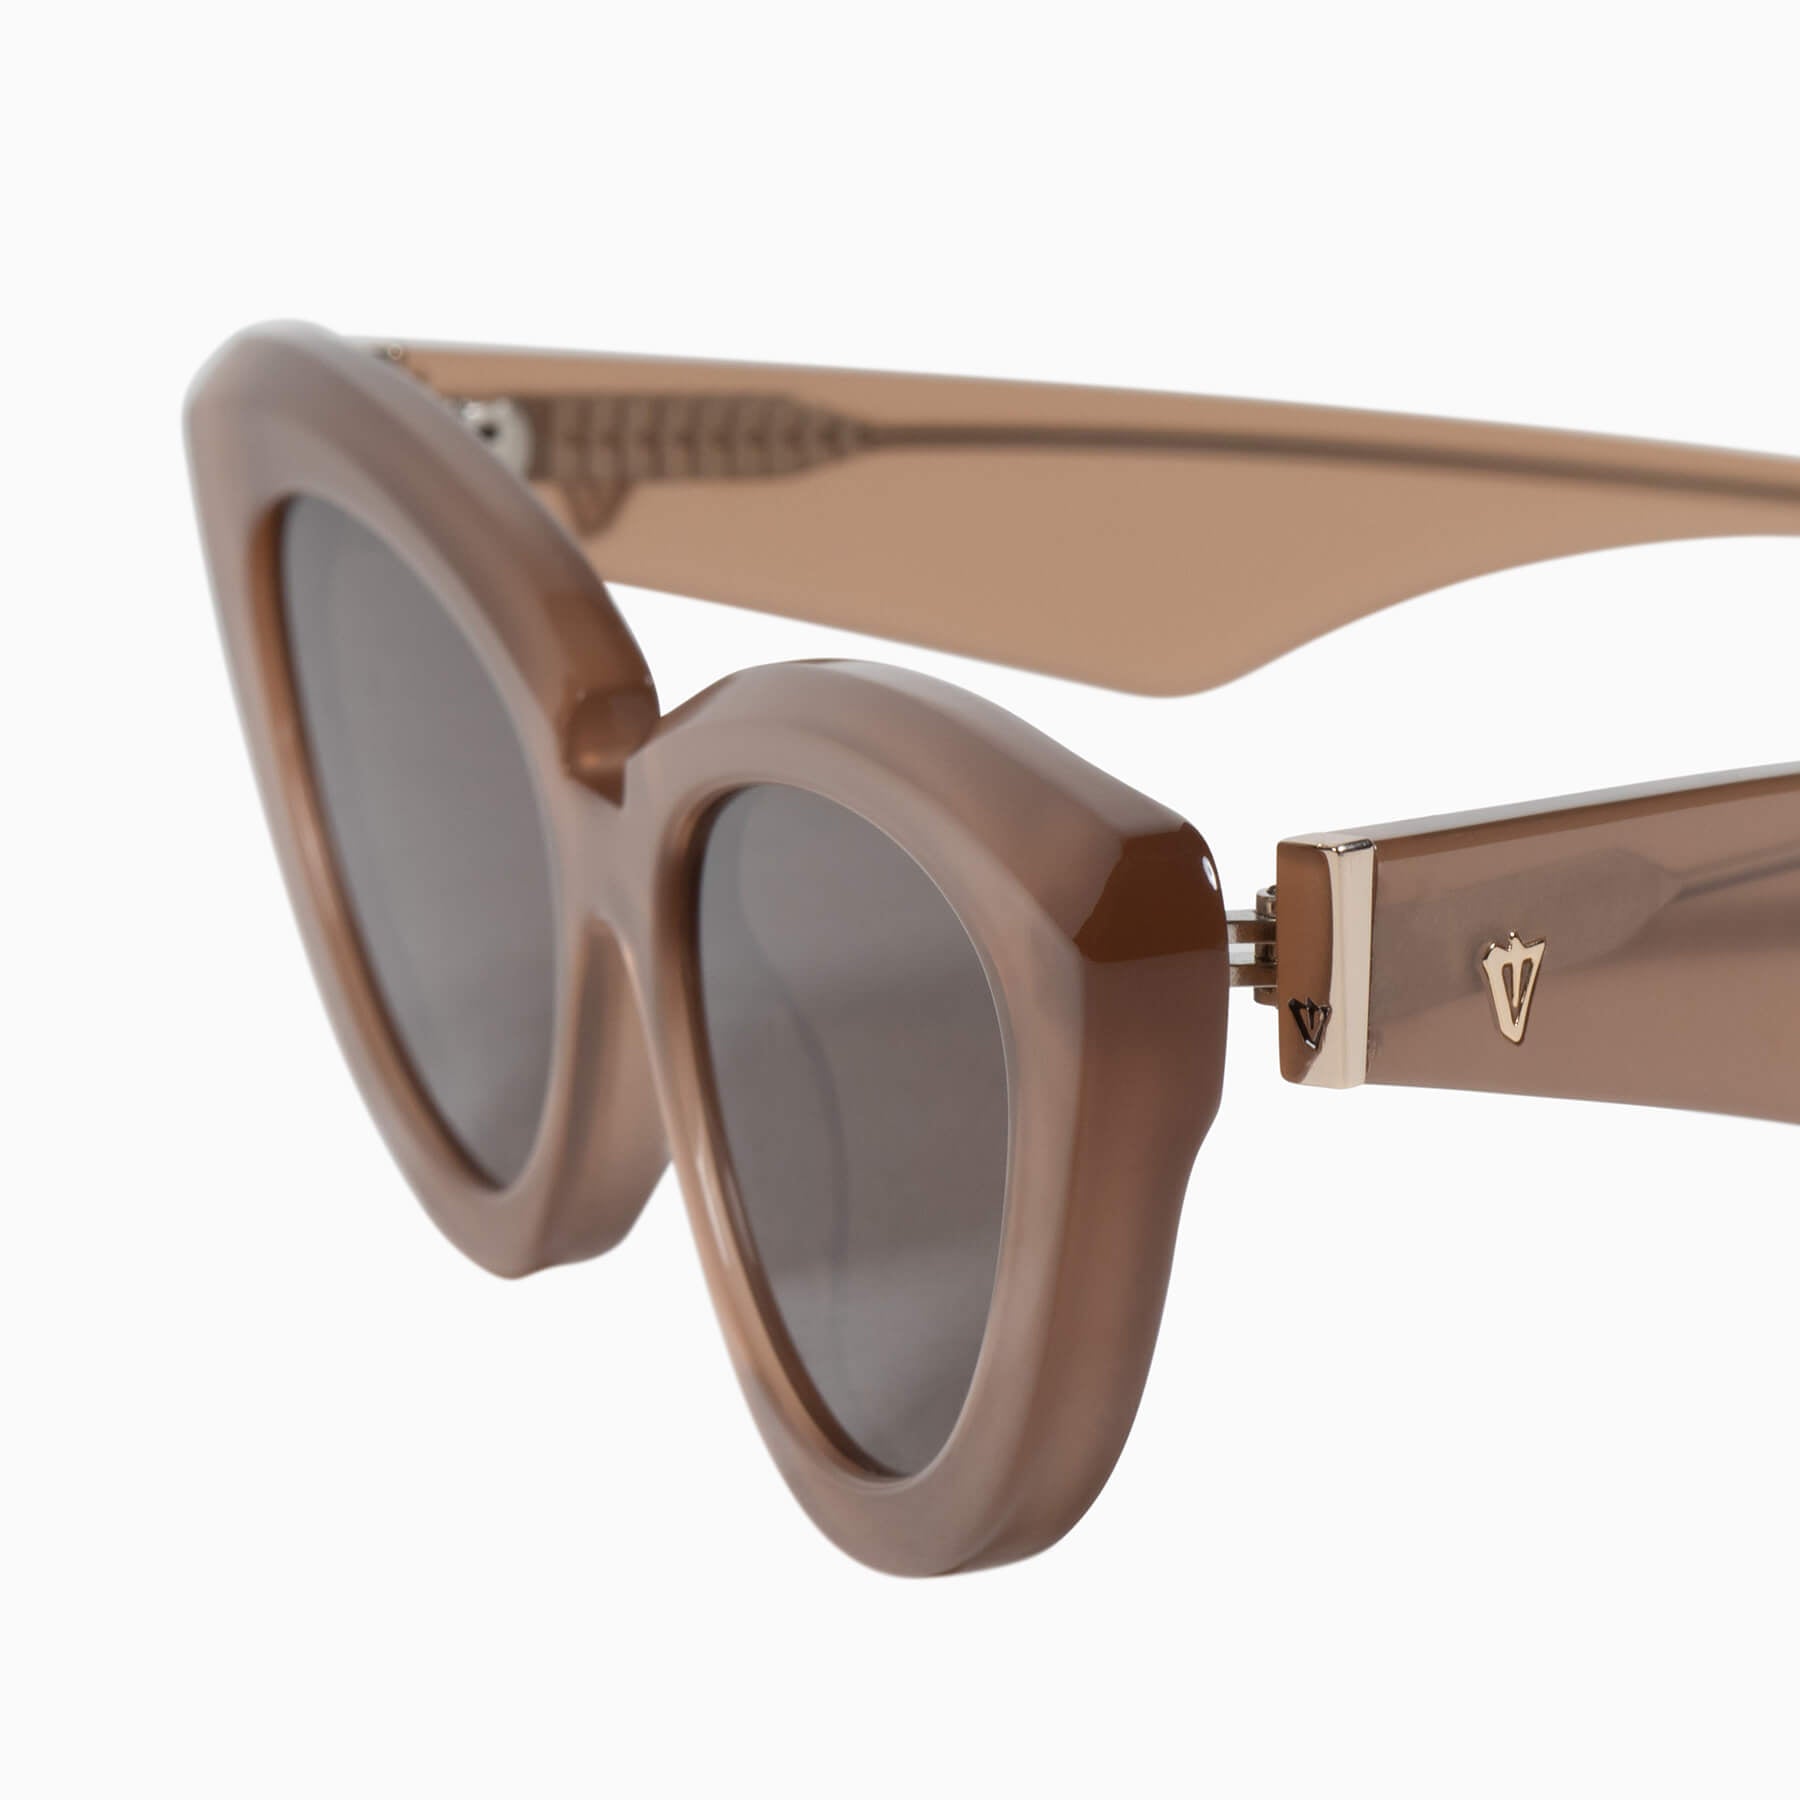 Dayze | Sunglasses - Chestnut w. Gold Metal Trim / Brown Lens